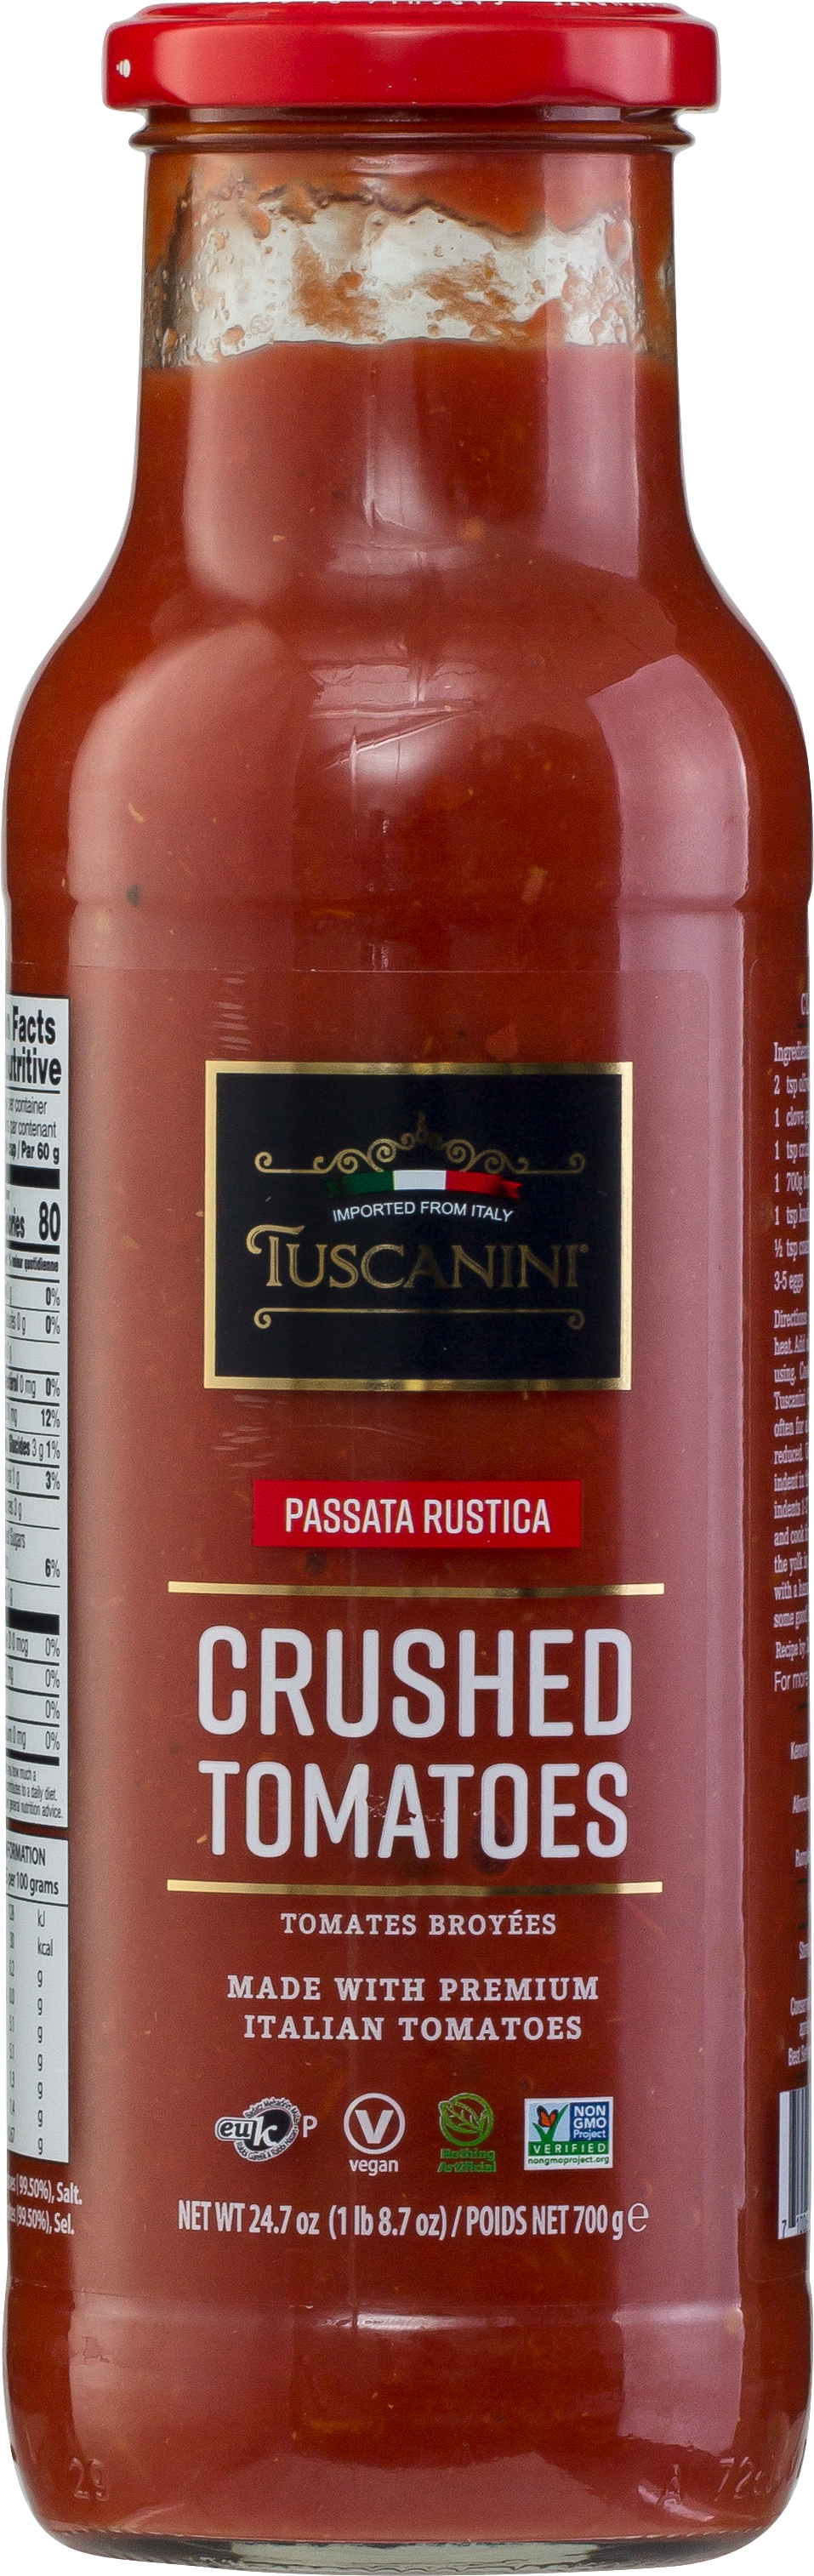 Tuscanini Crushed Tomatoes